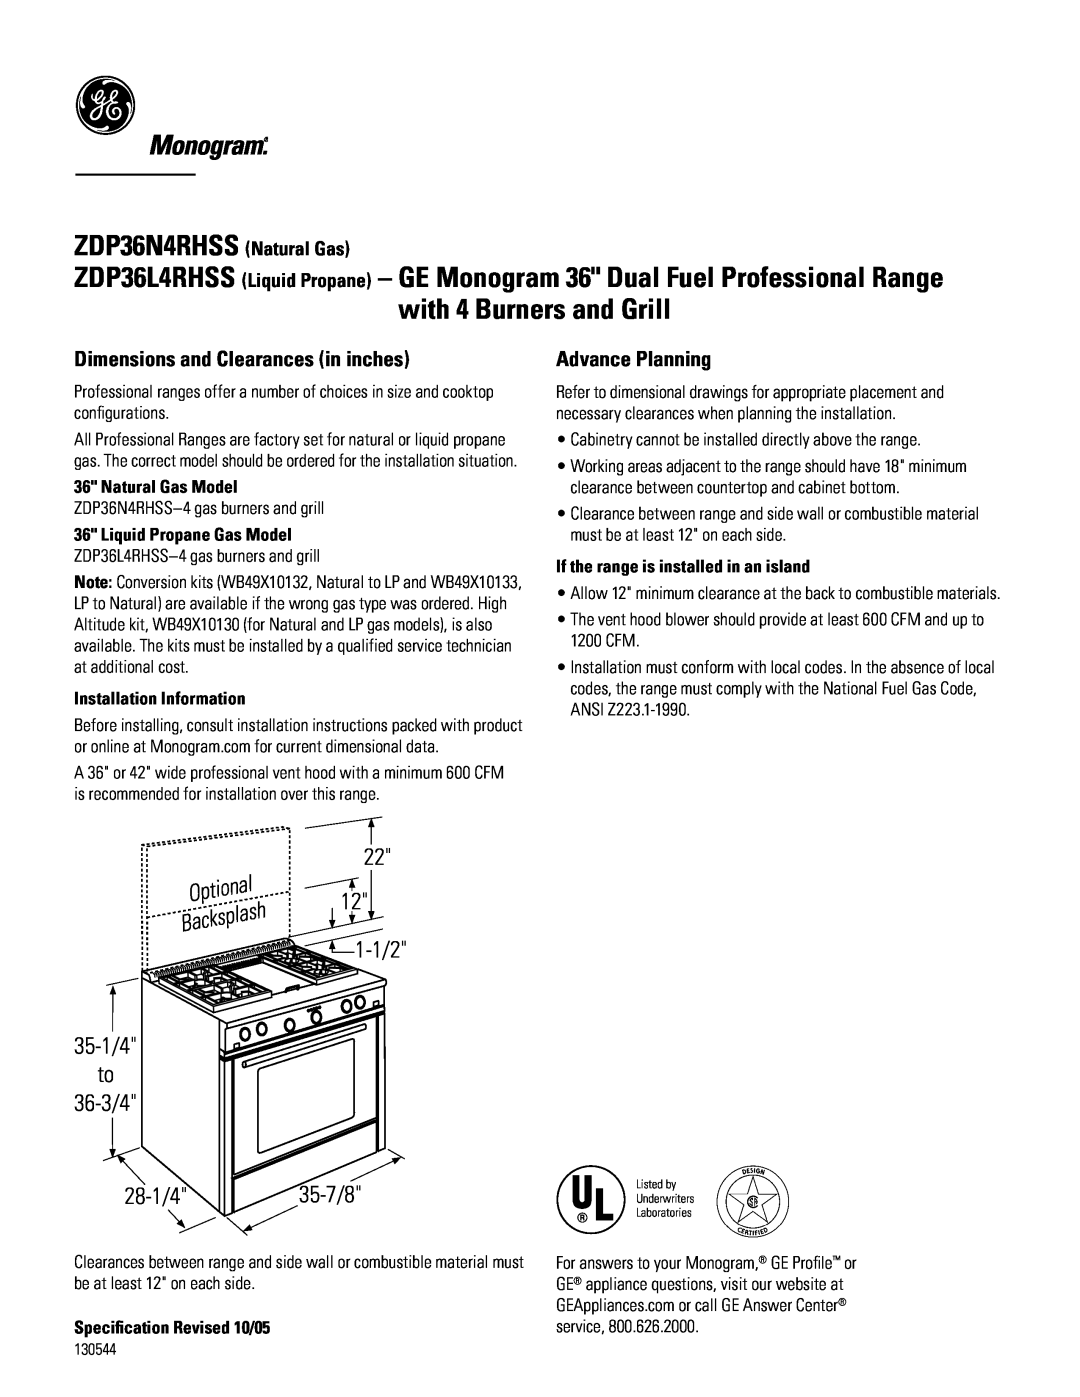 GE ZDP36L4RHSS4 dimensions GE Monogram 36 Dual Fuel Professional Range with 4 Burners and Grill, ZDP36N4RHSS, 1-1/2 